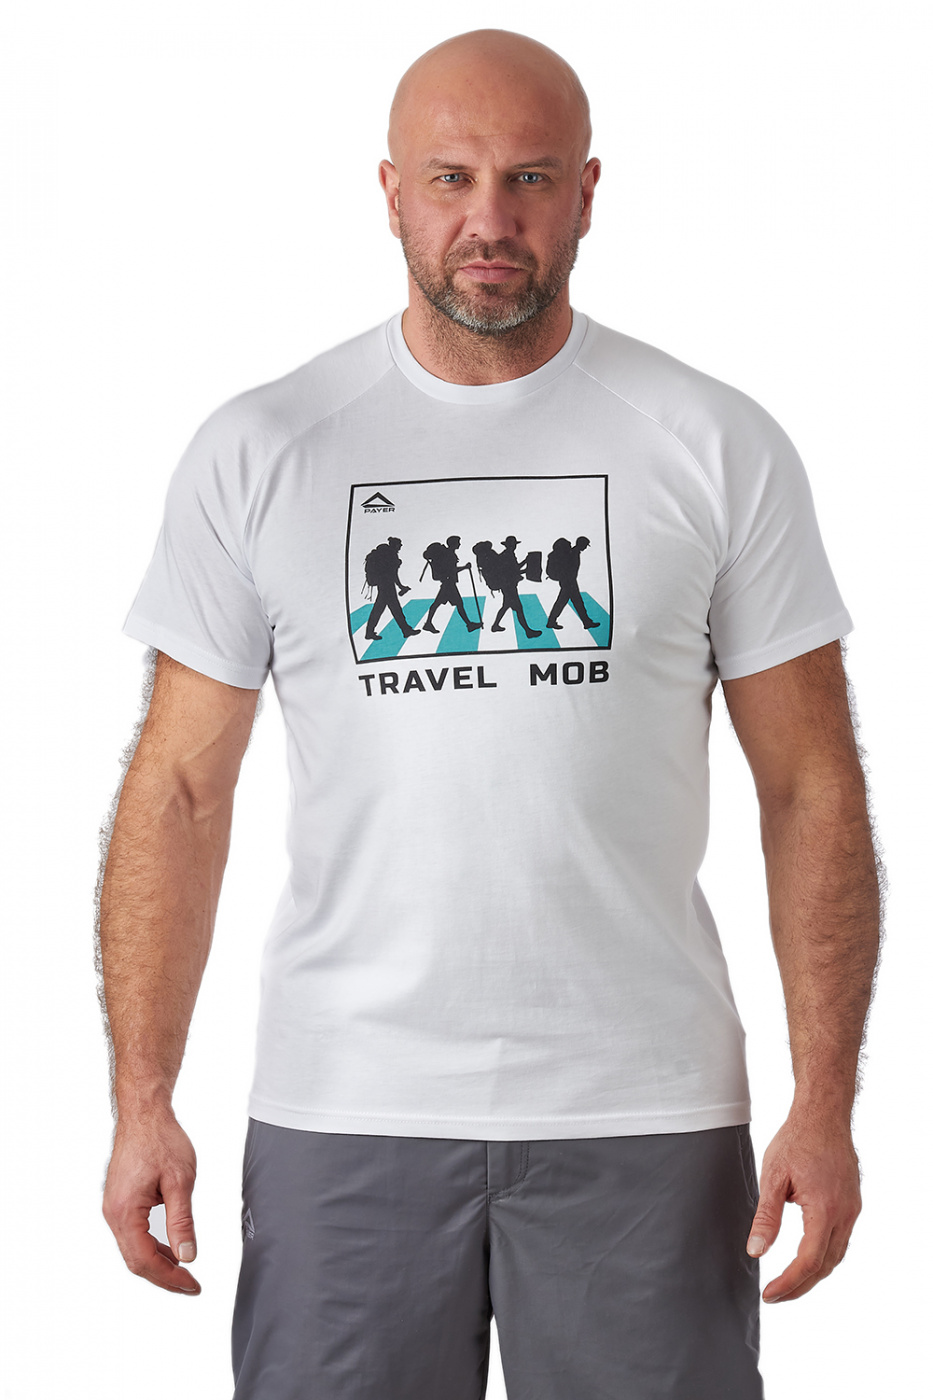 картинка Футболка PAYER Travel Mob (Трэвел моб) (хлопок, белый)